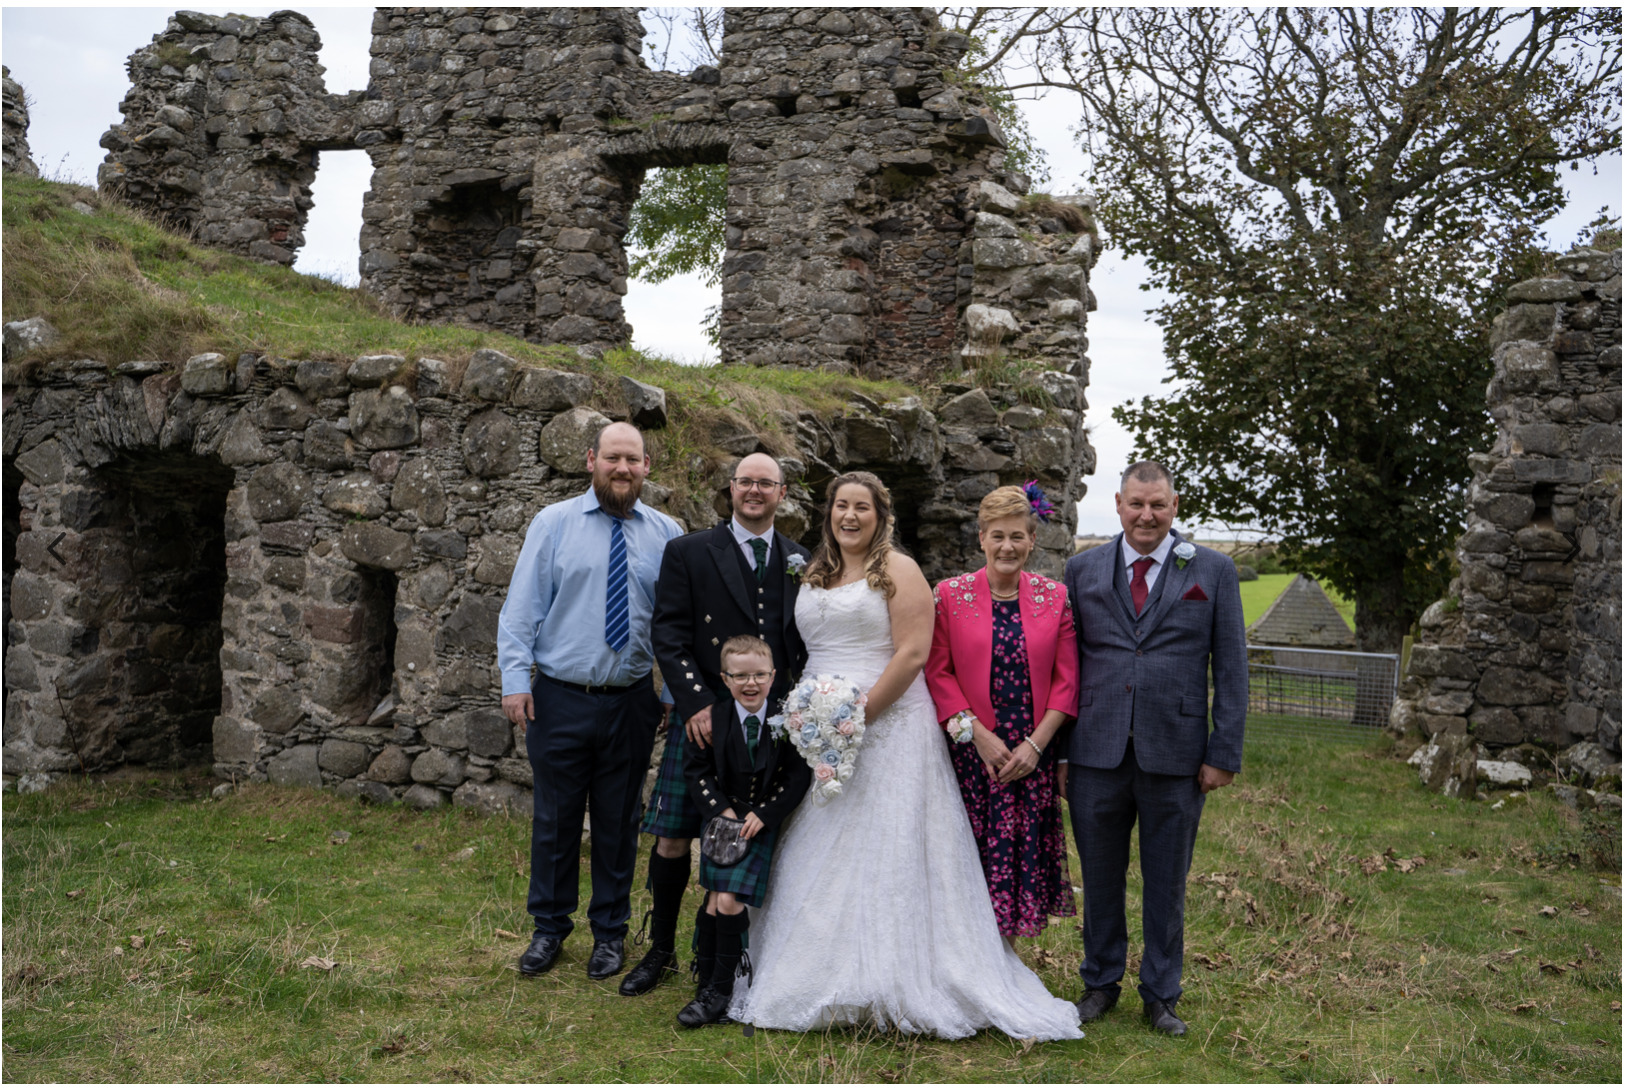 Wedding group shot at castle ruins